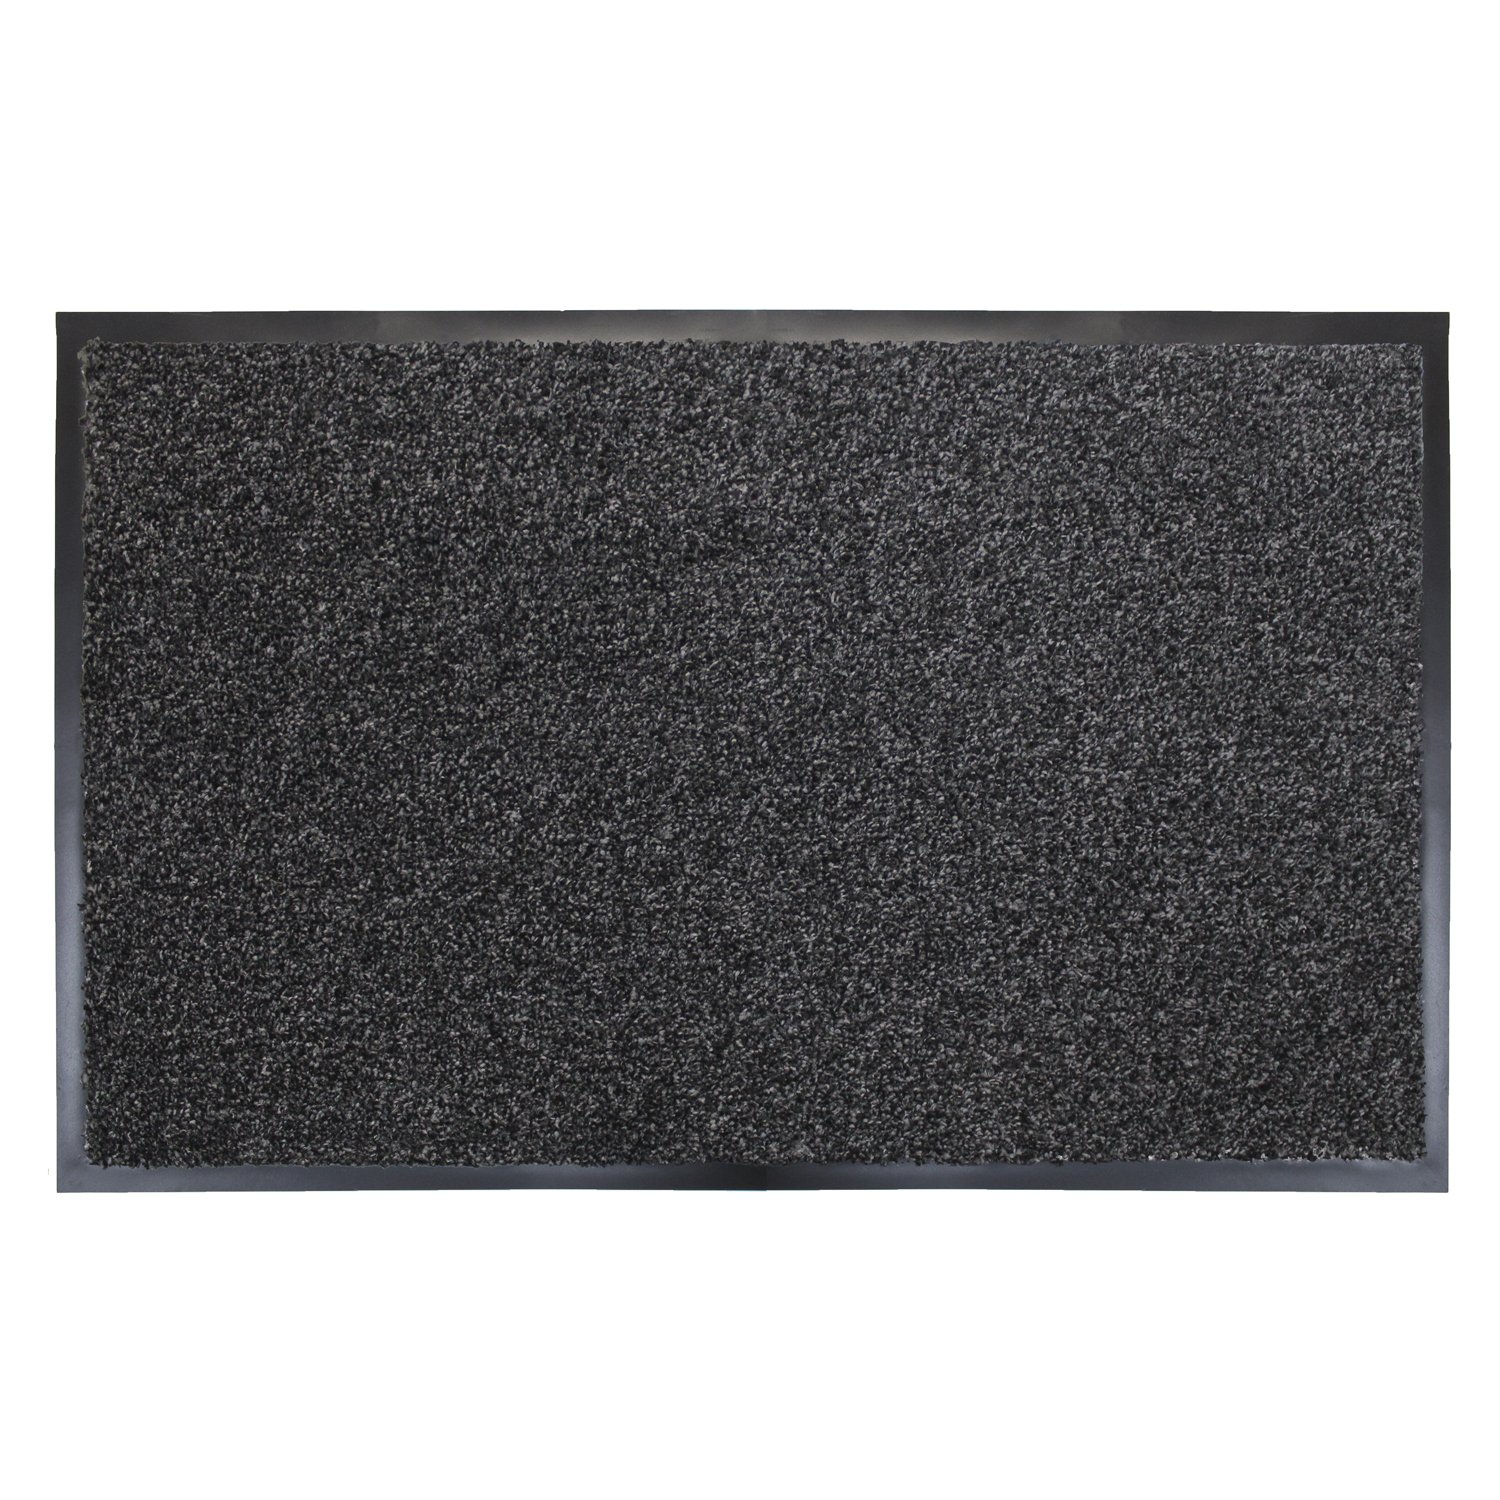 Single Primeur Mud Master Doormat 90 x 60cm in Assorted styles Image 3